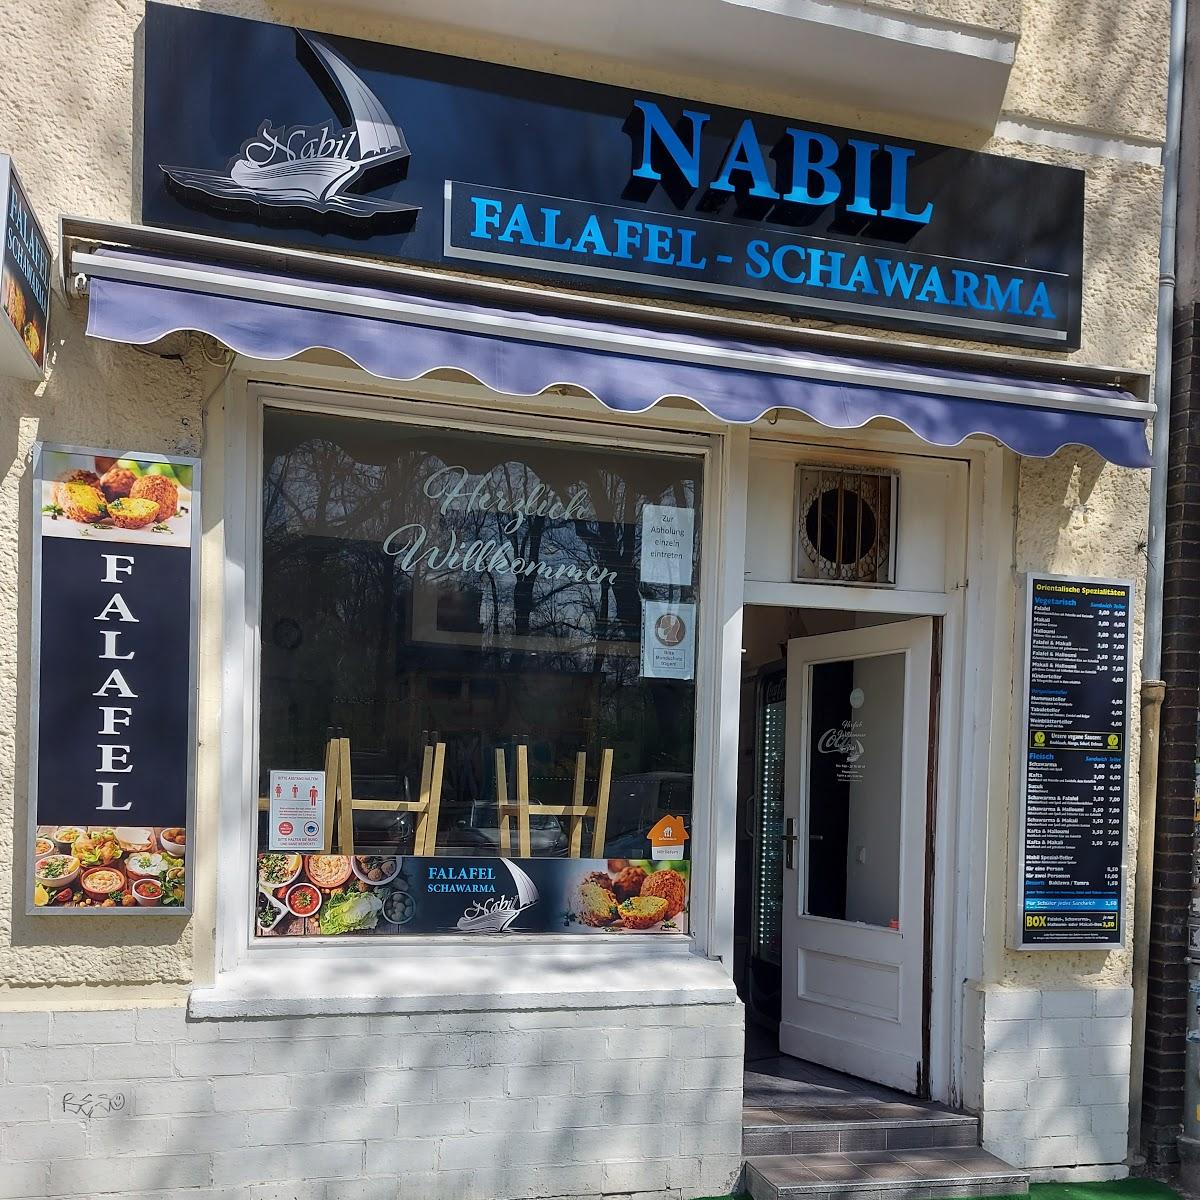 Restaurant "Nabil Falafel Shawarma" in Berlin